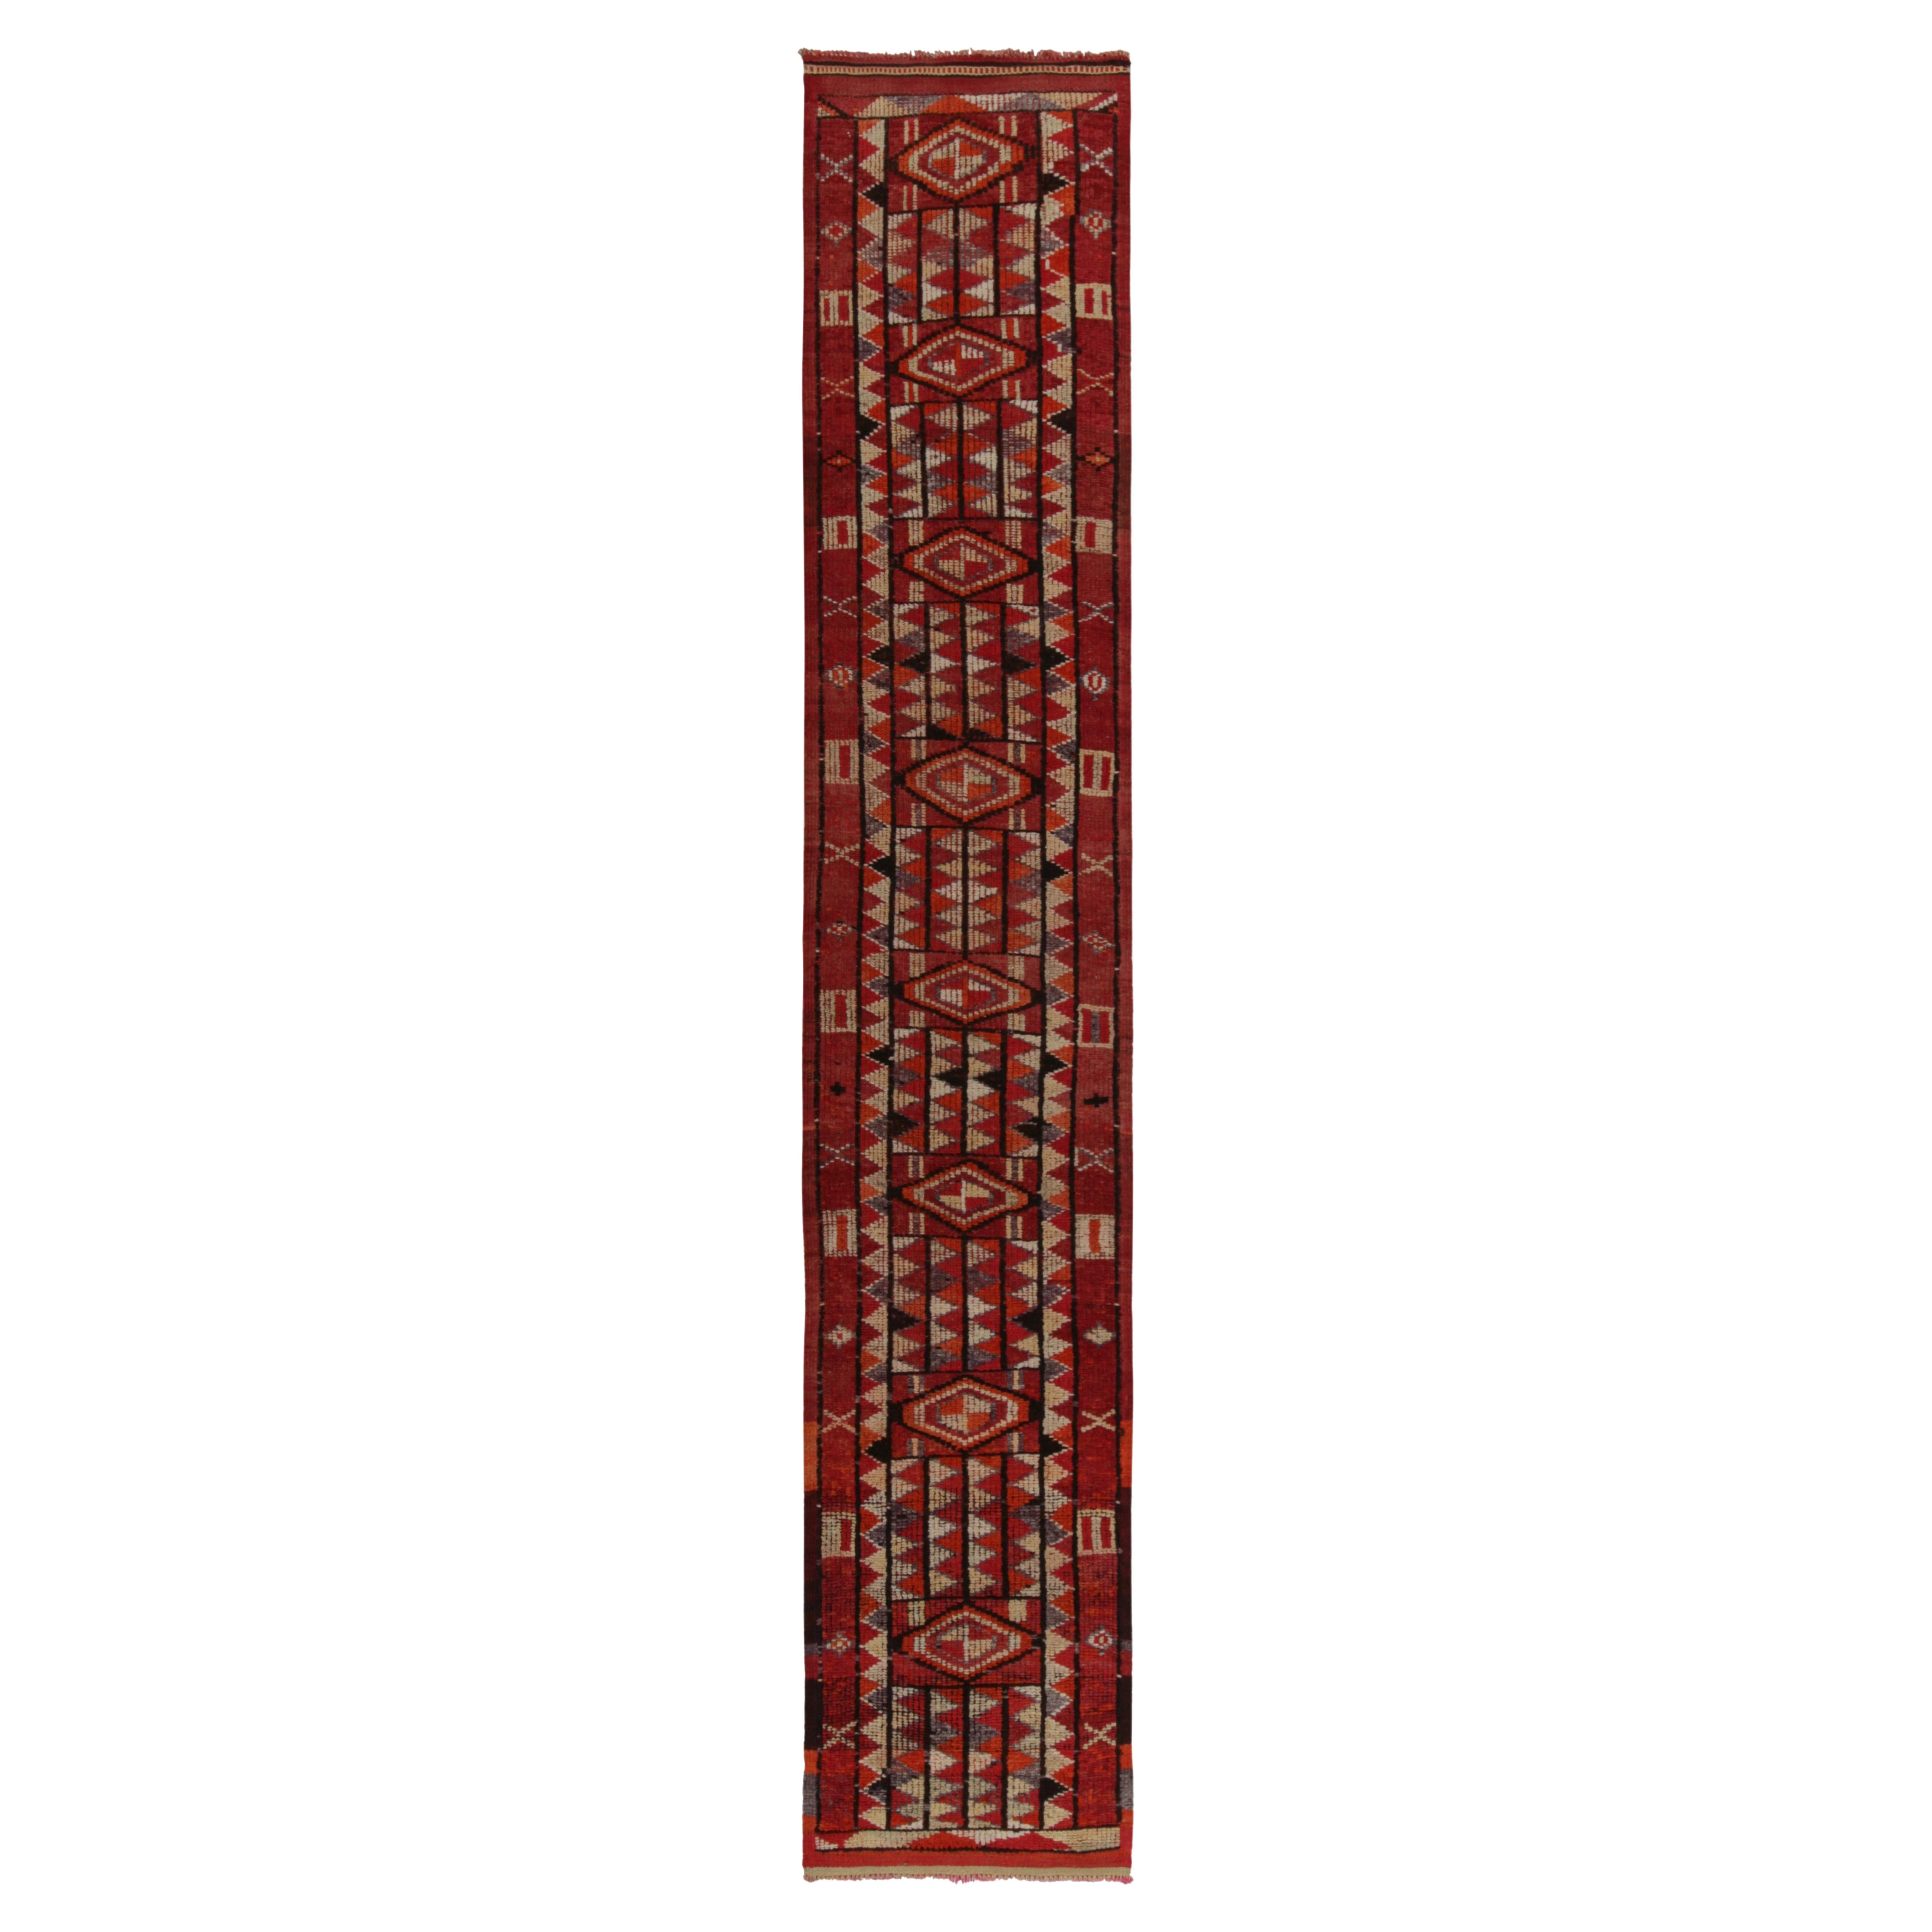 Vintage Tribal Kilim Runner Red with Vibrant Geometric Patterns by Rug & Kilim